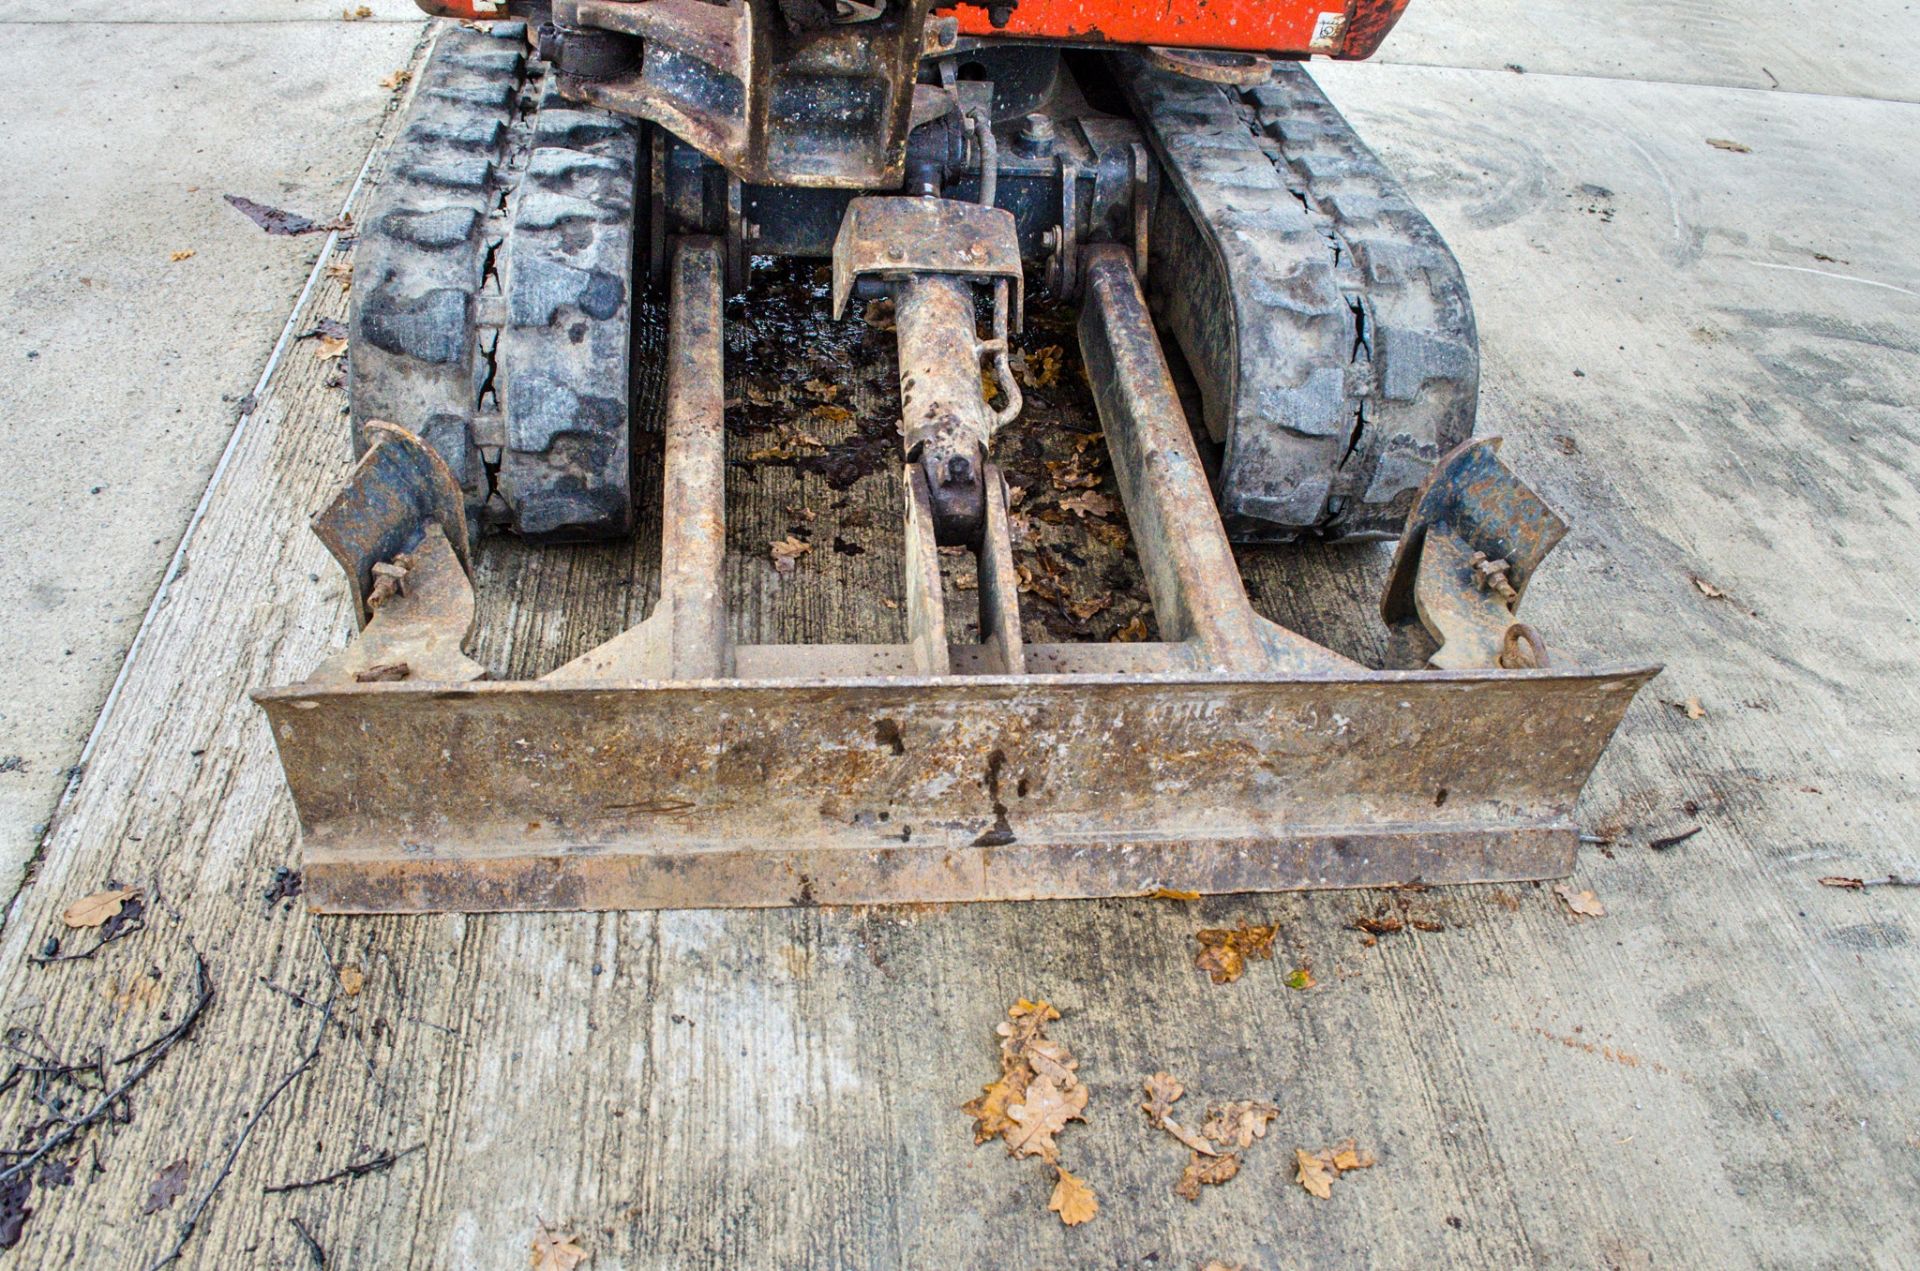 Kubota KX016-4 1.6 tonne rubber tracked mini excavator Year: 2014 S/N: 577998 Recorded Hours: 2026 - Image 15 of 18